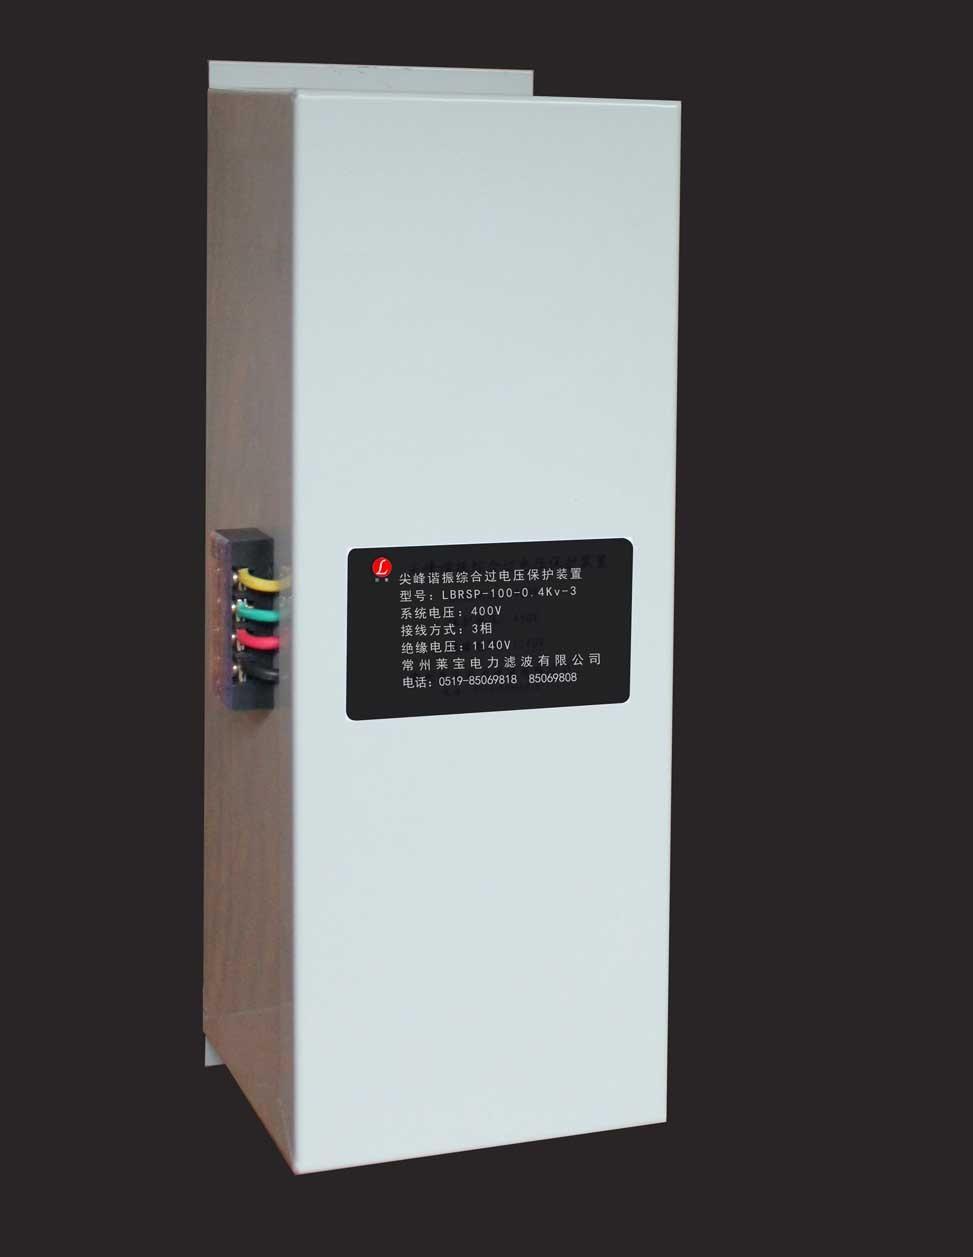 JLRSP型过电压滤除装置